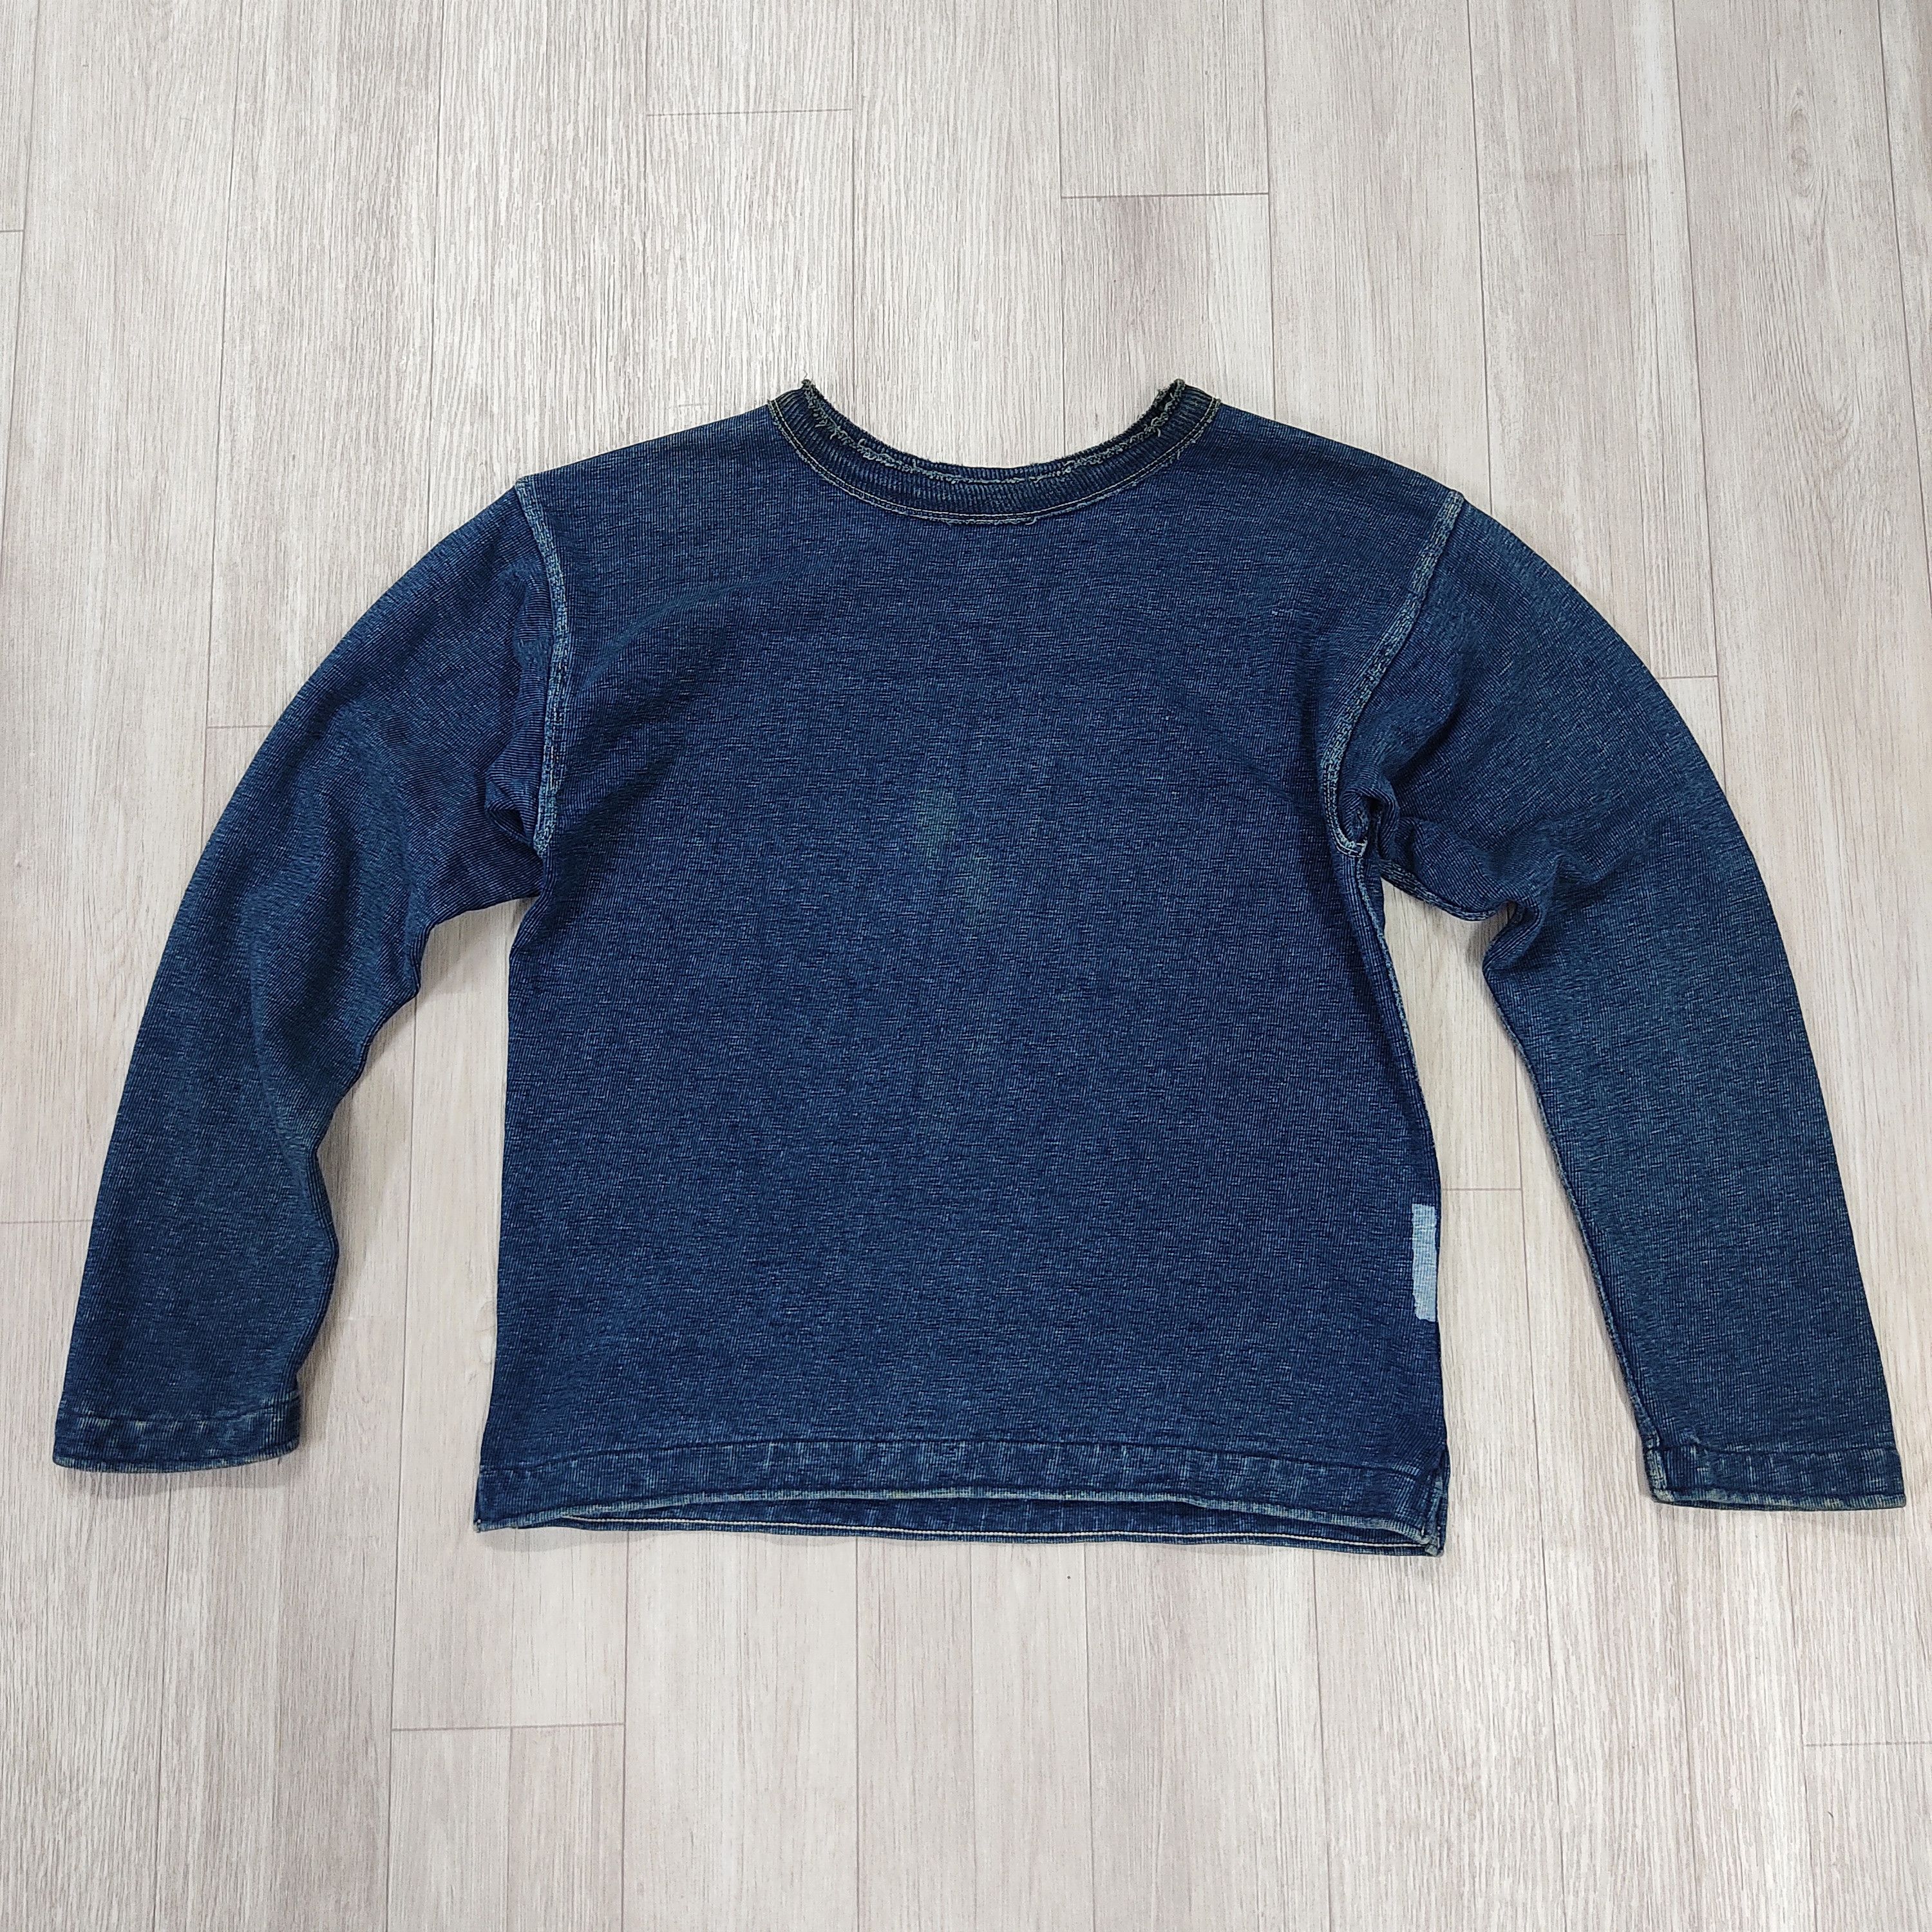 45RPM Crewneck Indigo Sweater - 3